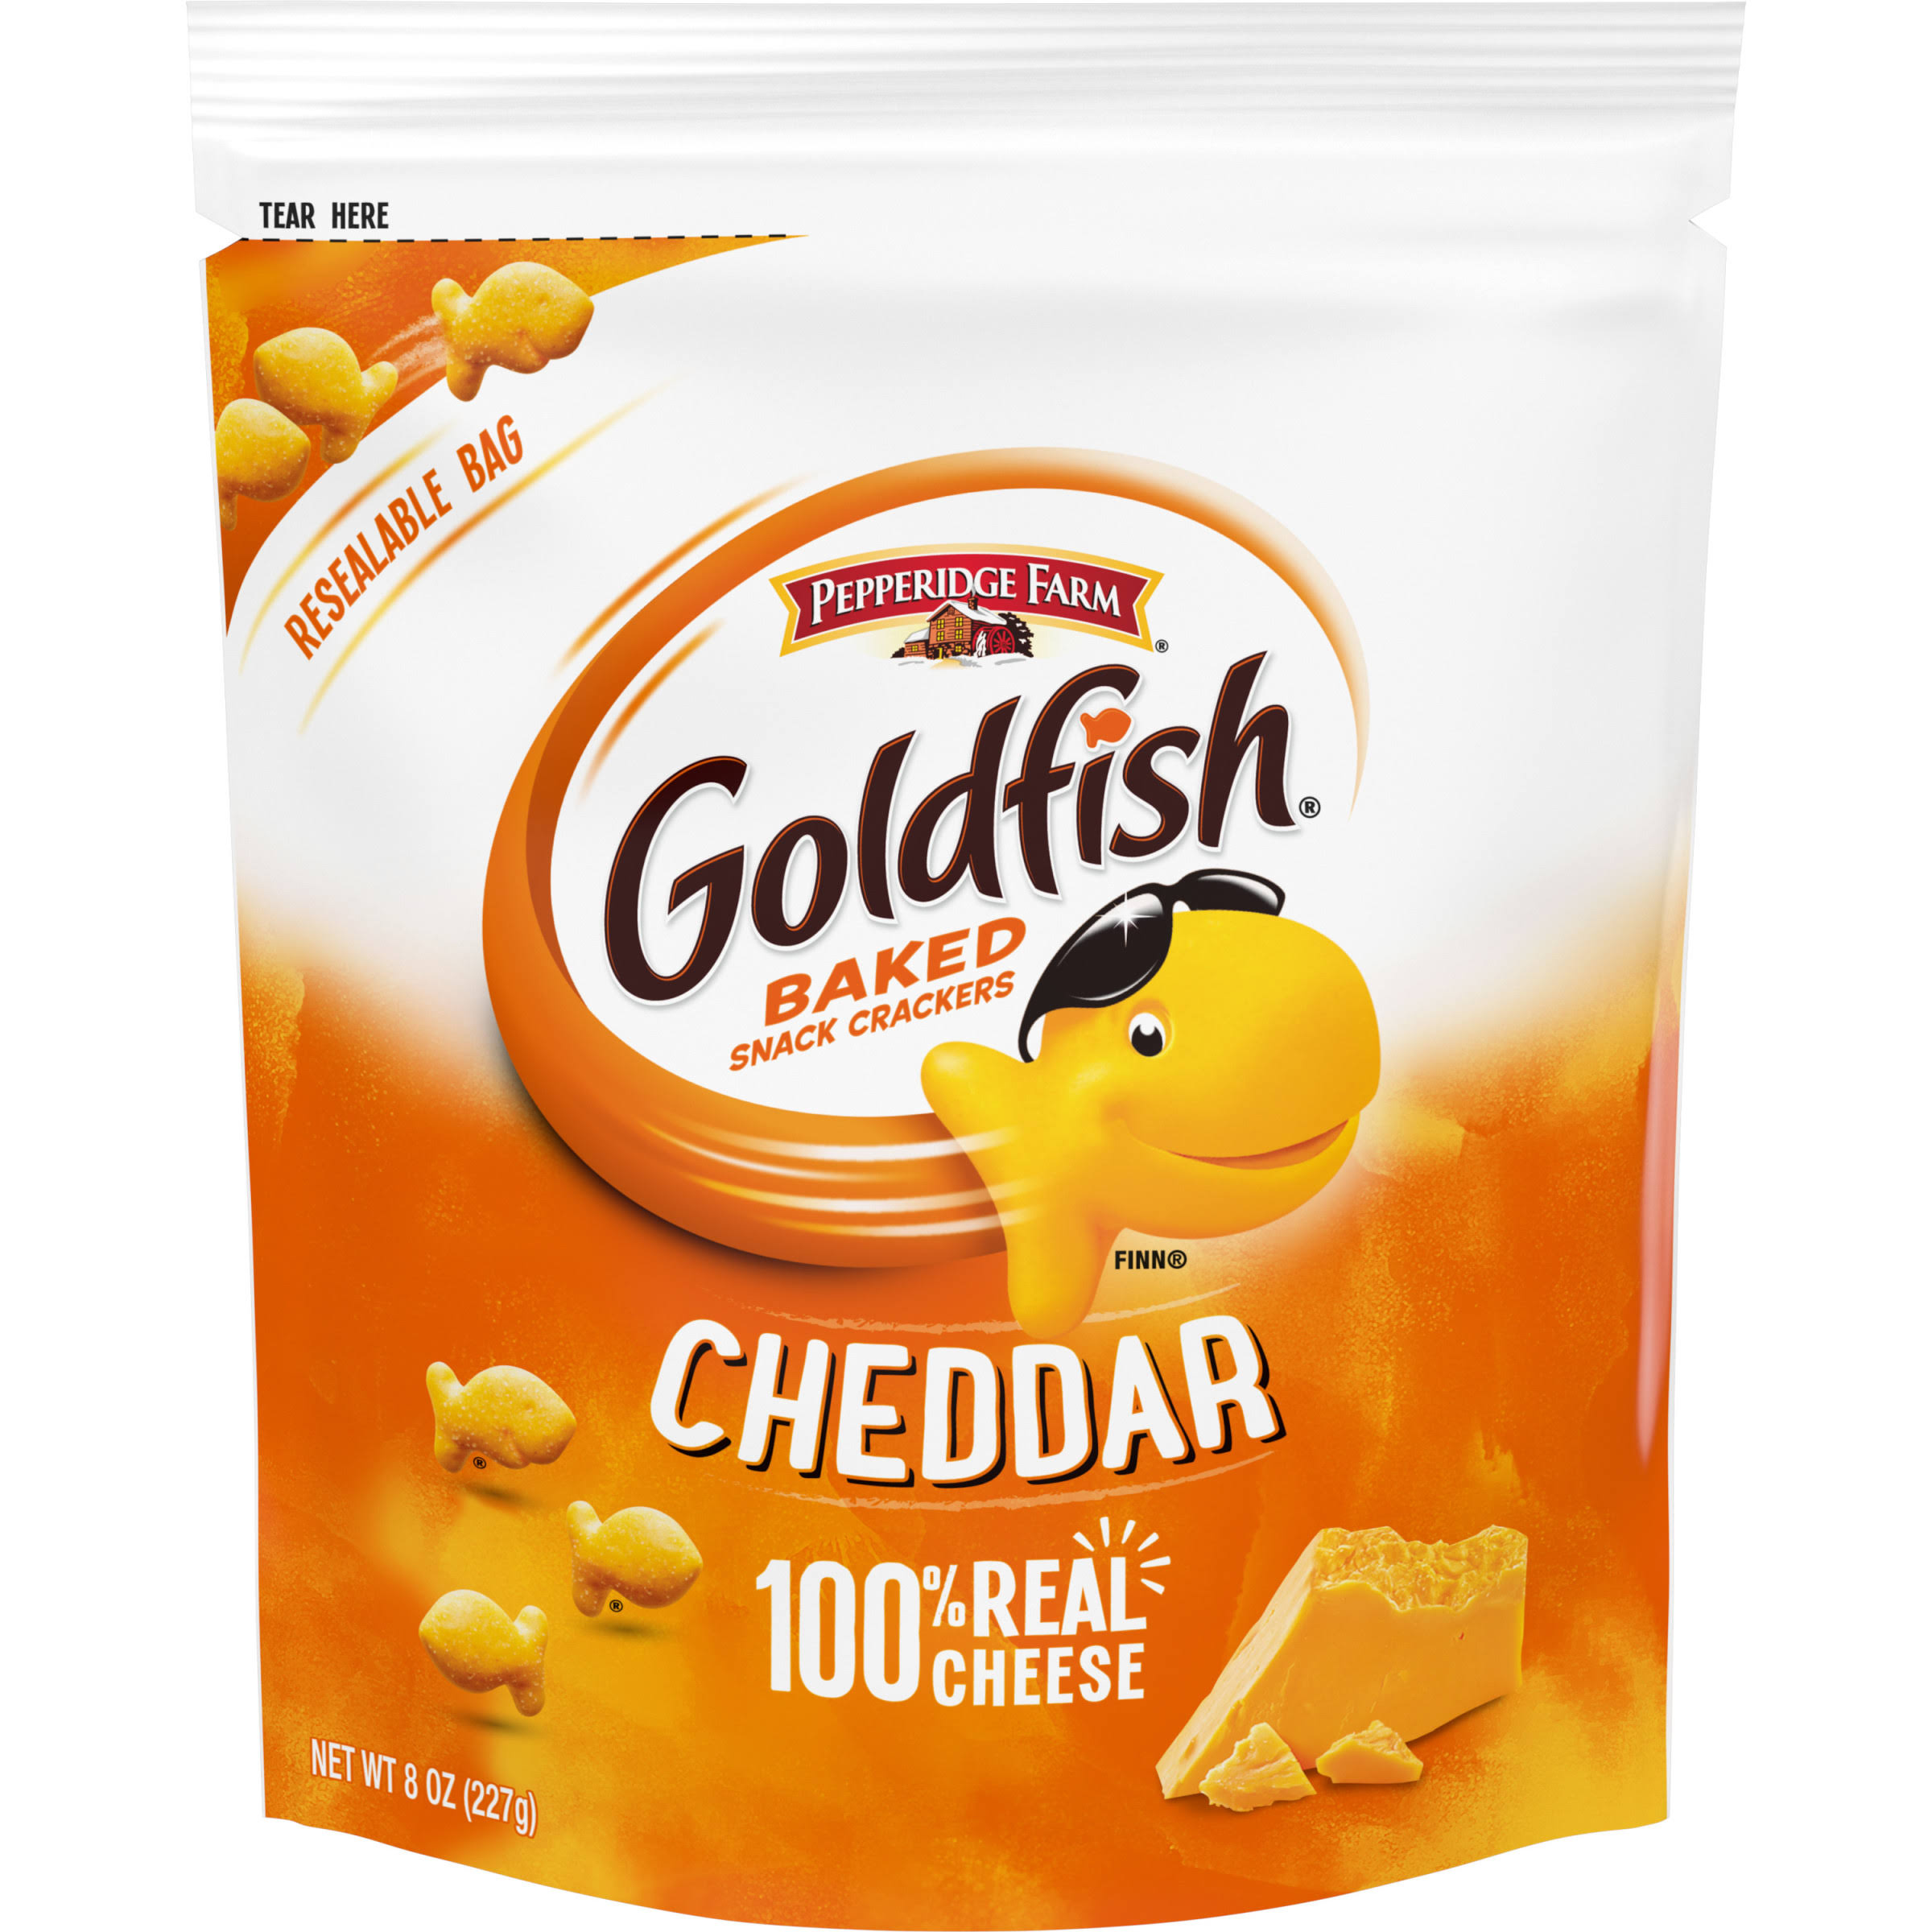 Goldfish Snack Crackers, Cheddar, Baked - 8 oz